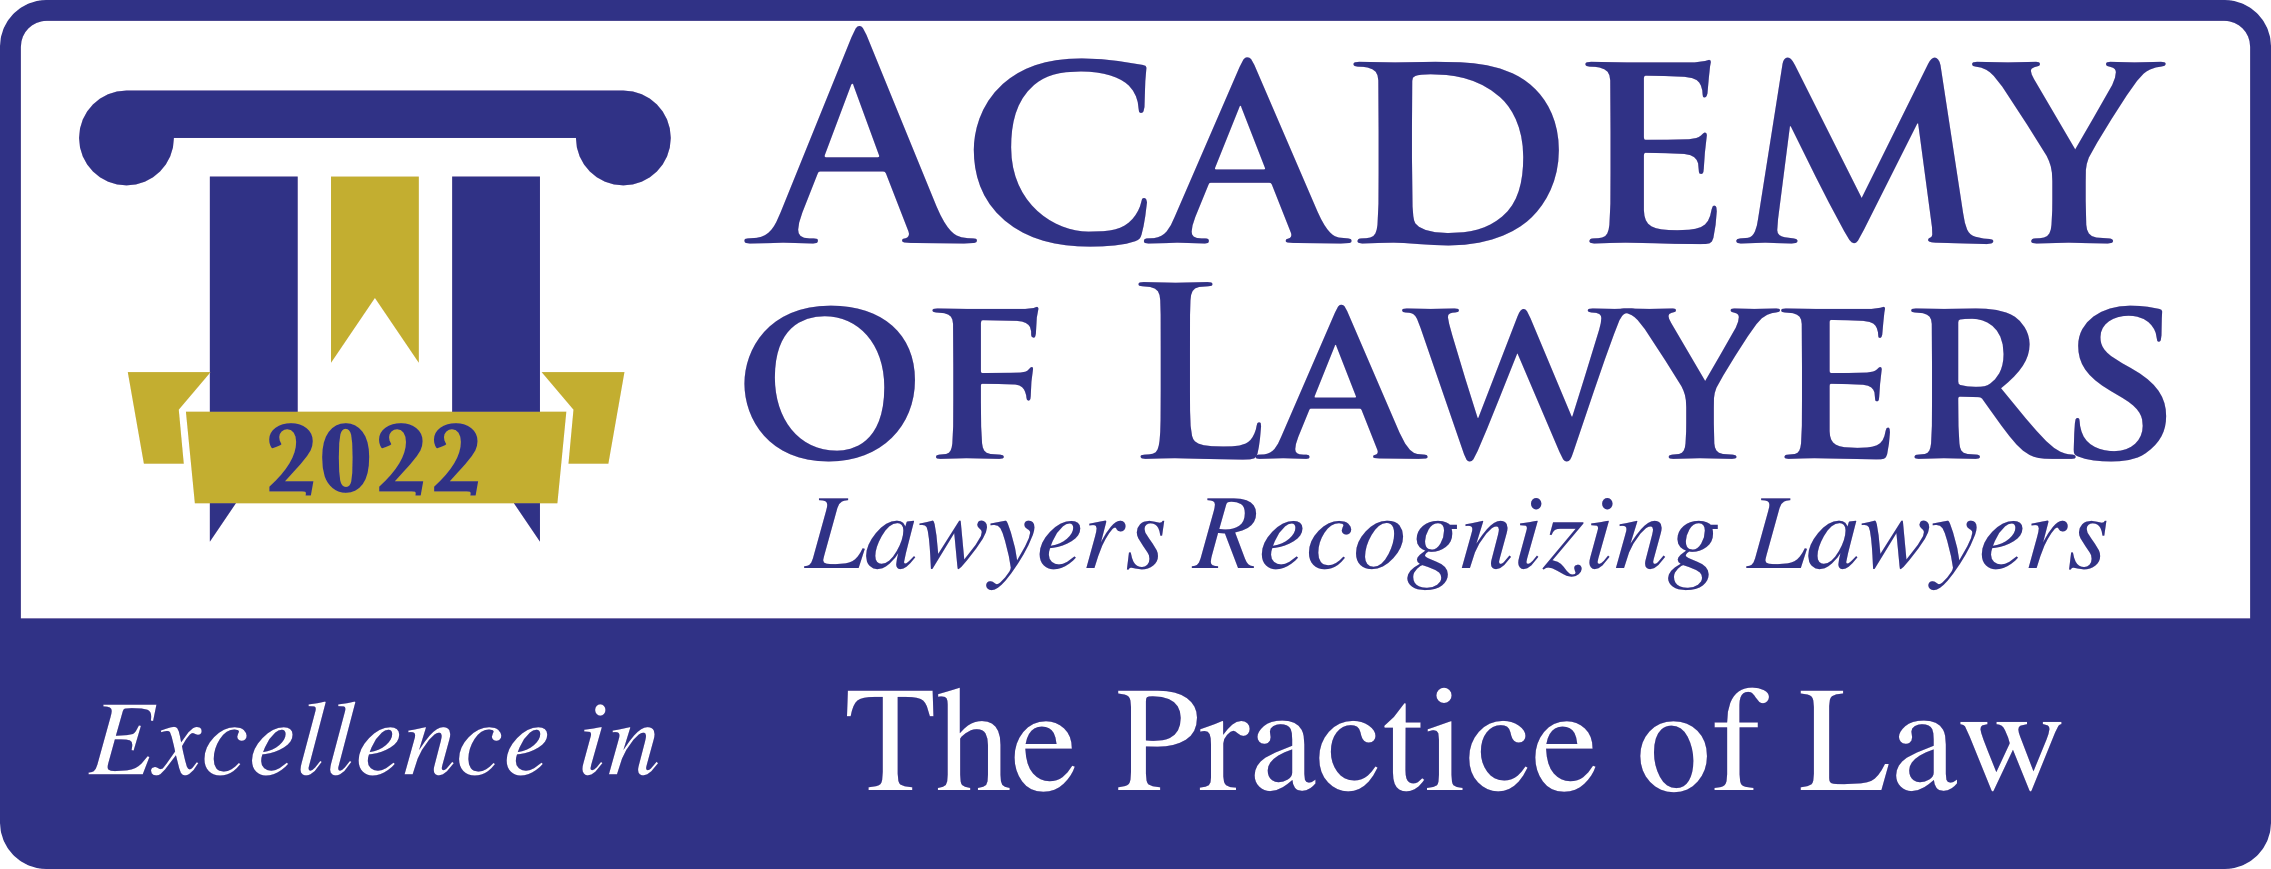 Academy of Lawyers